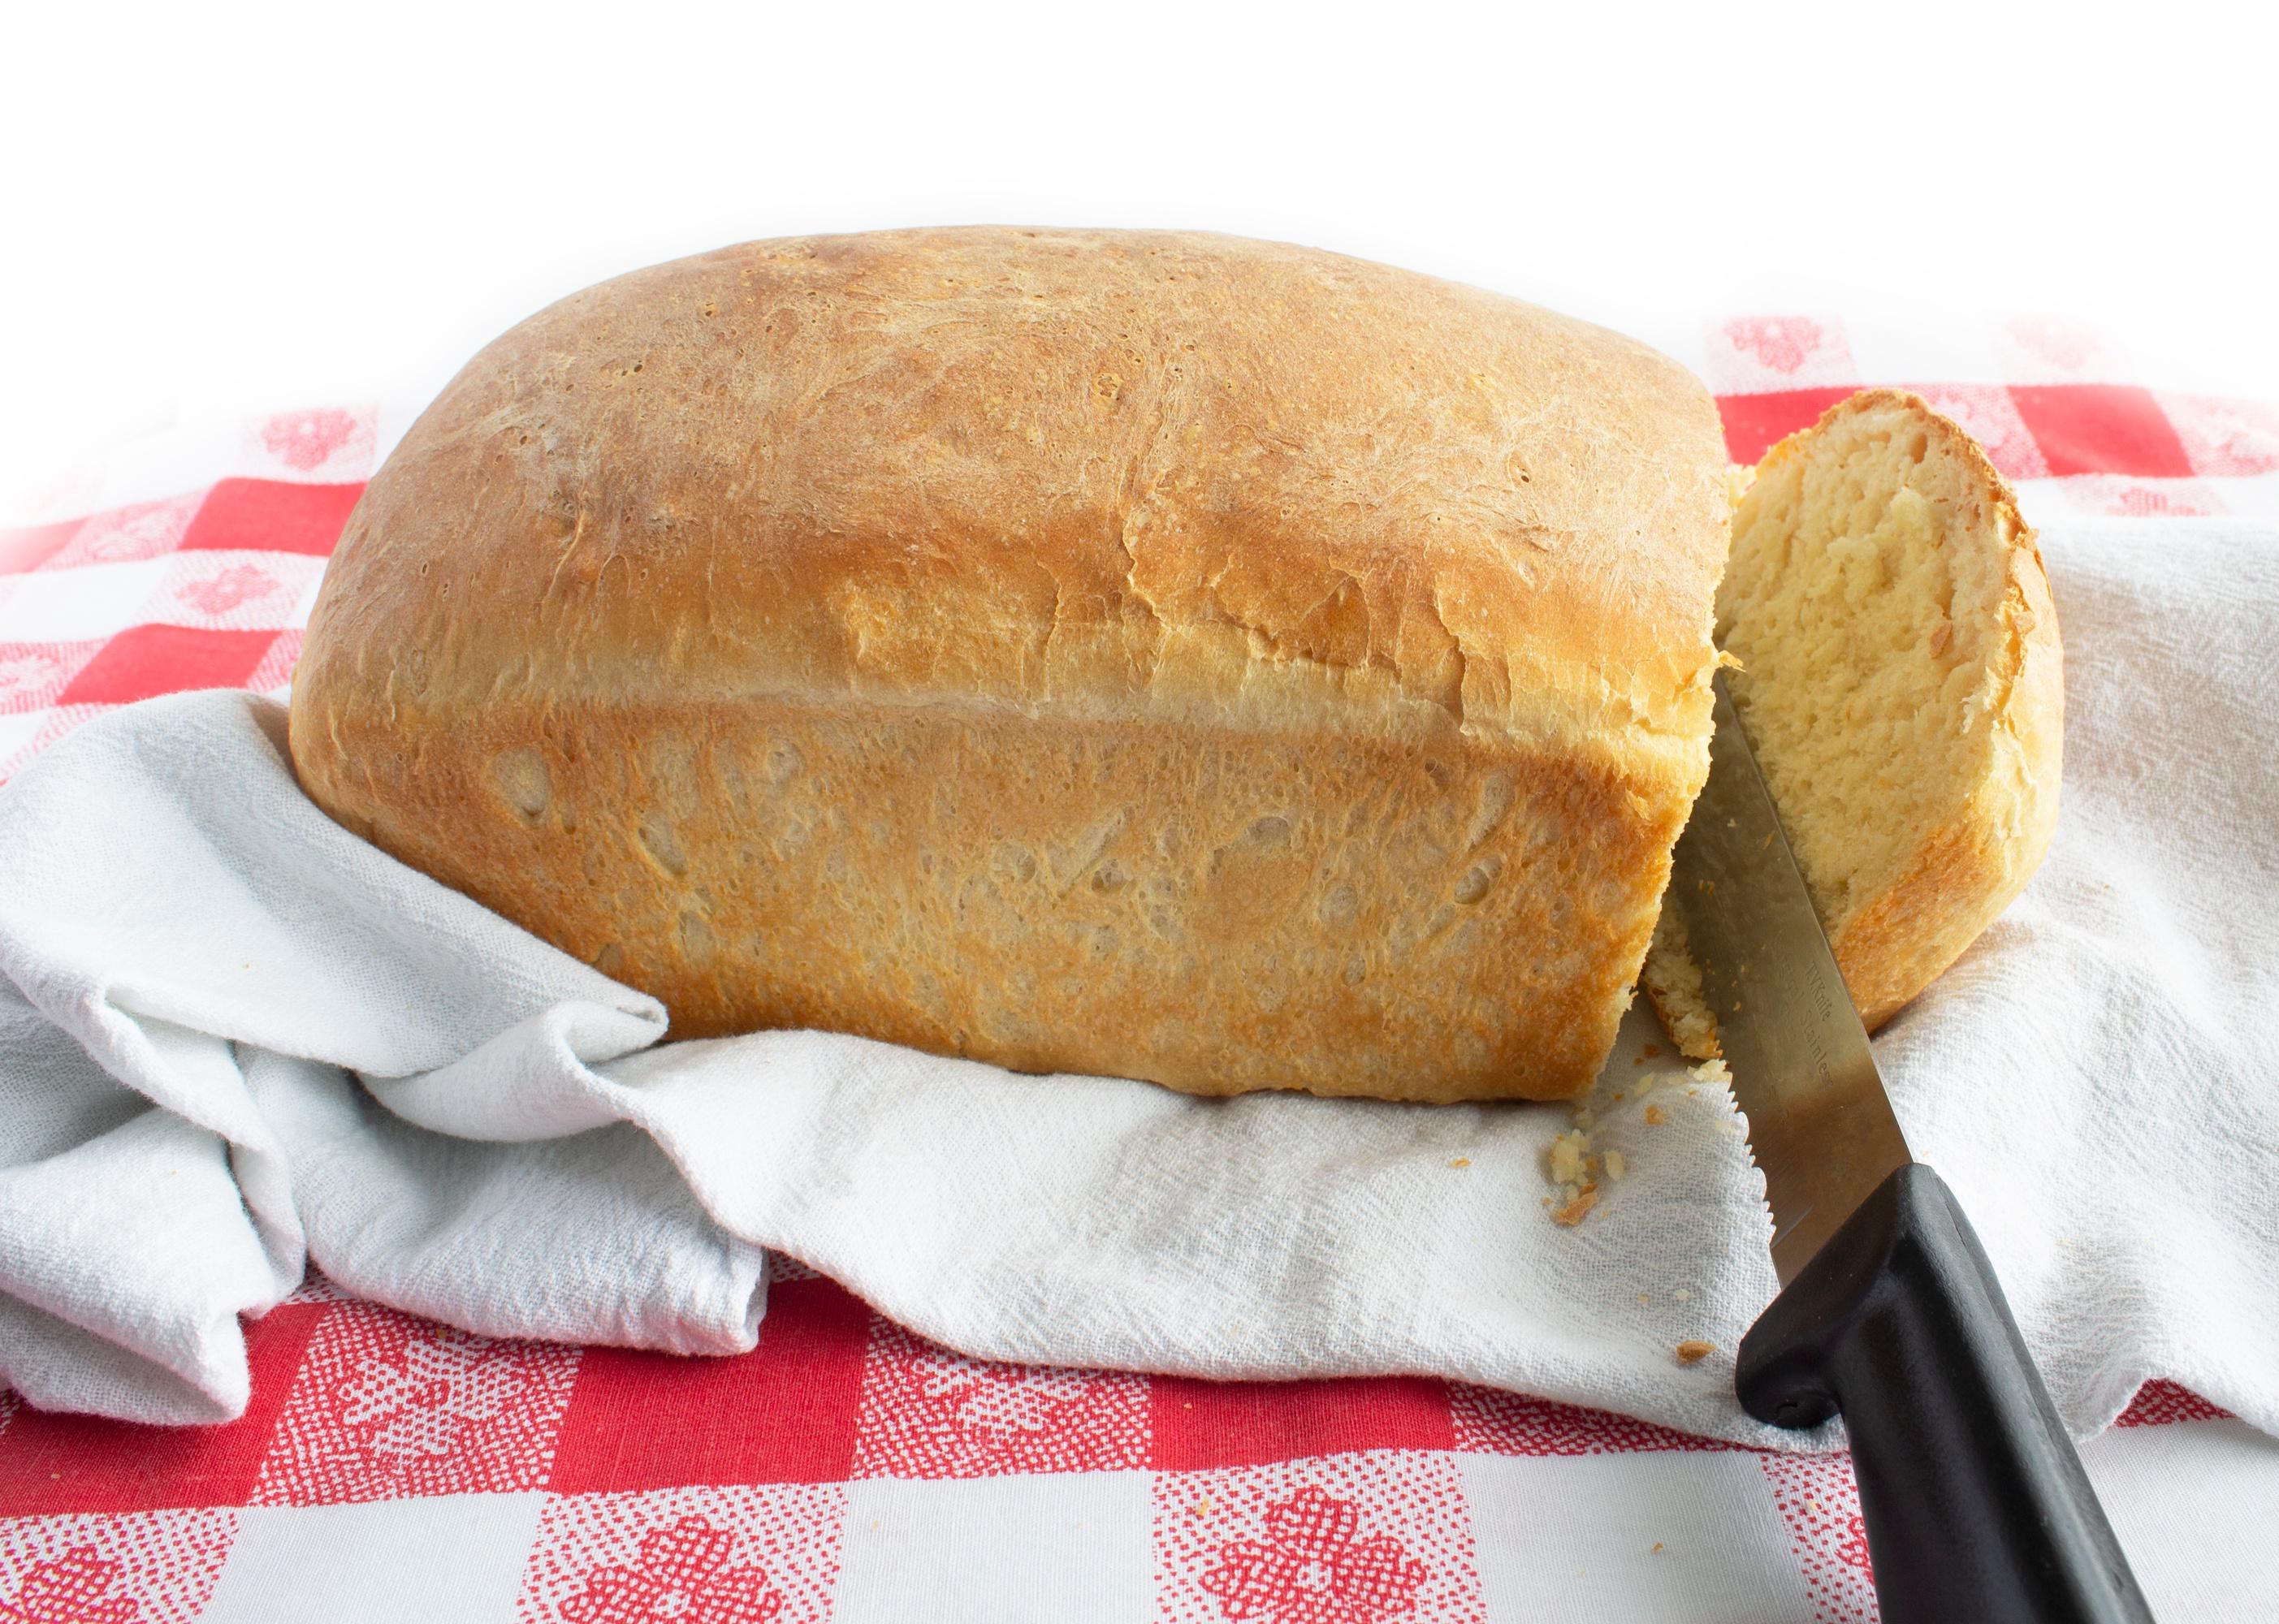 Knife slicing through fresh loaf of bread.